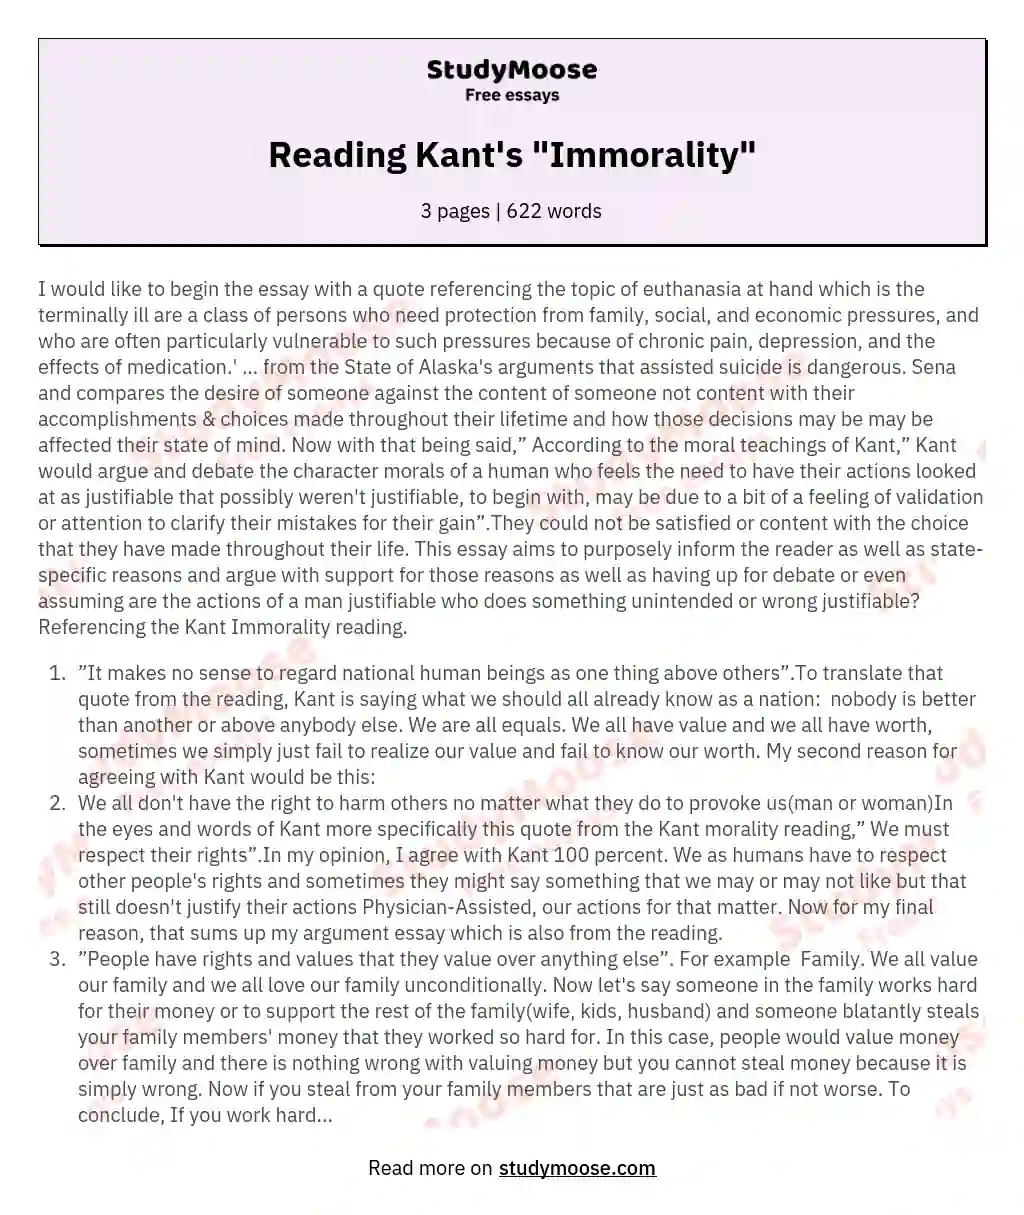 Reading Kant's "Immorality" essay